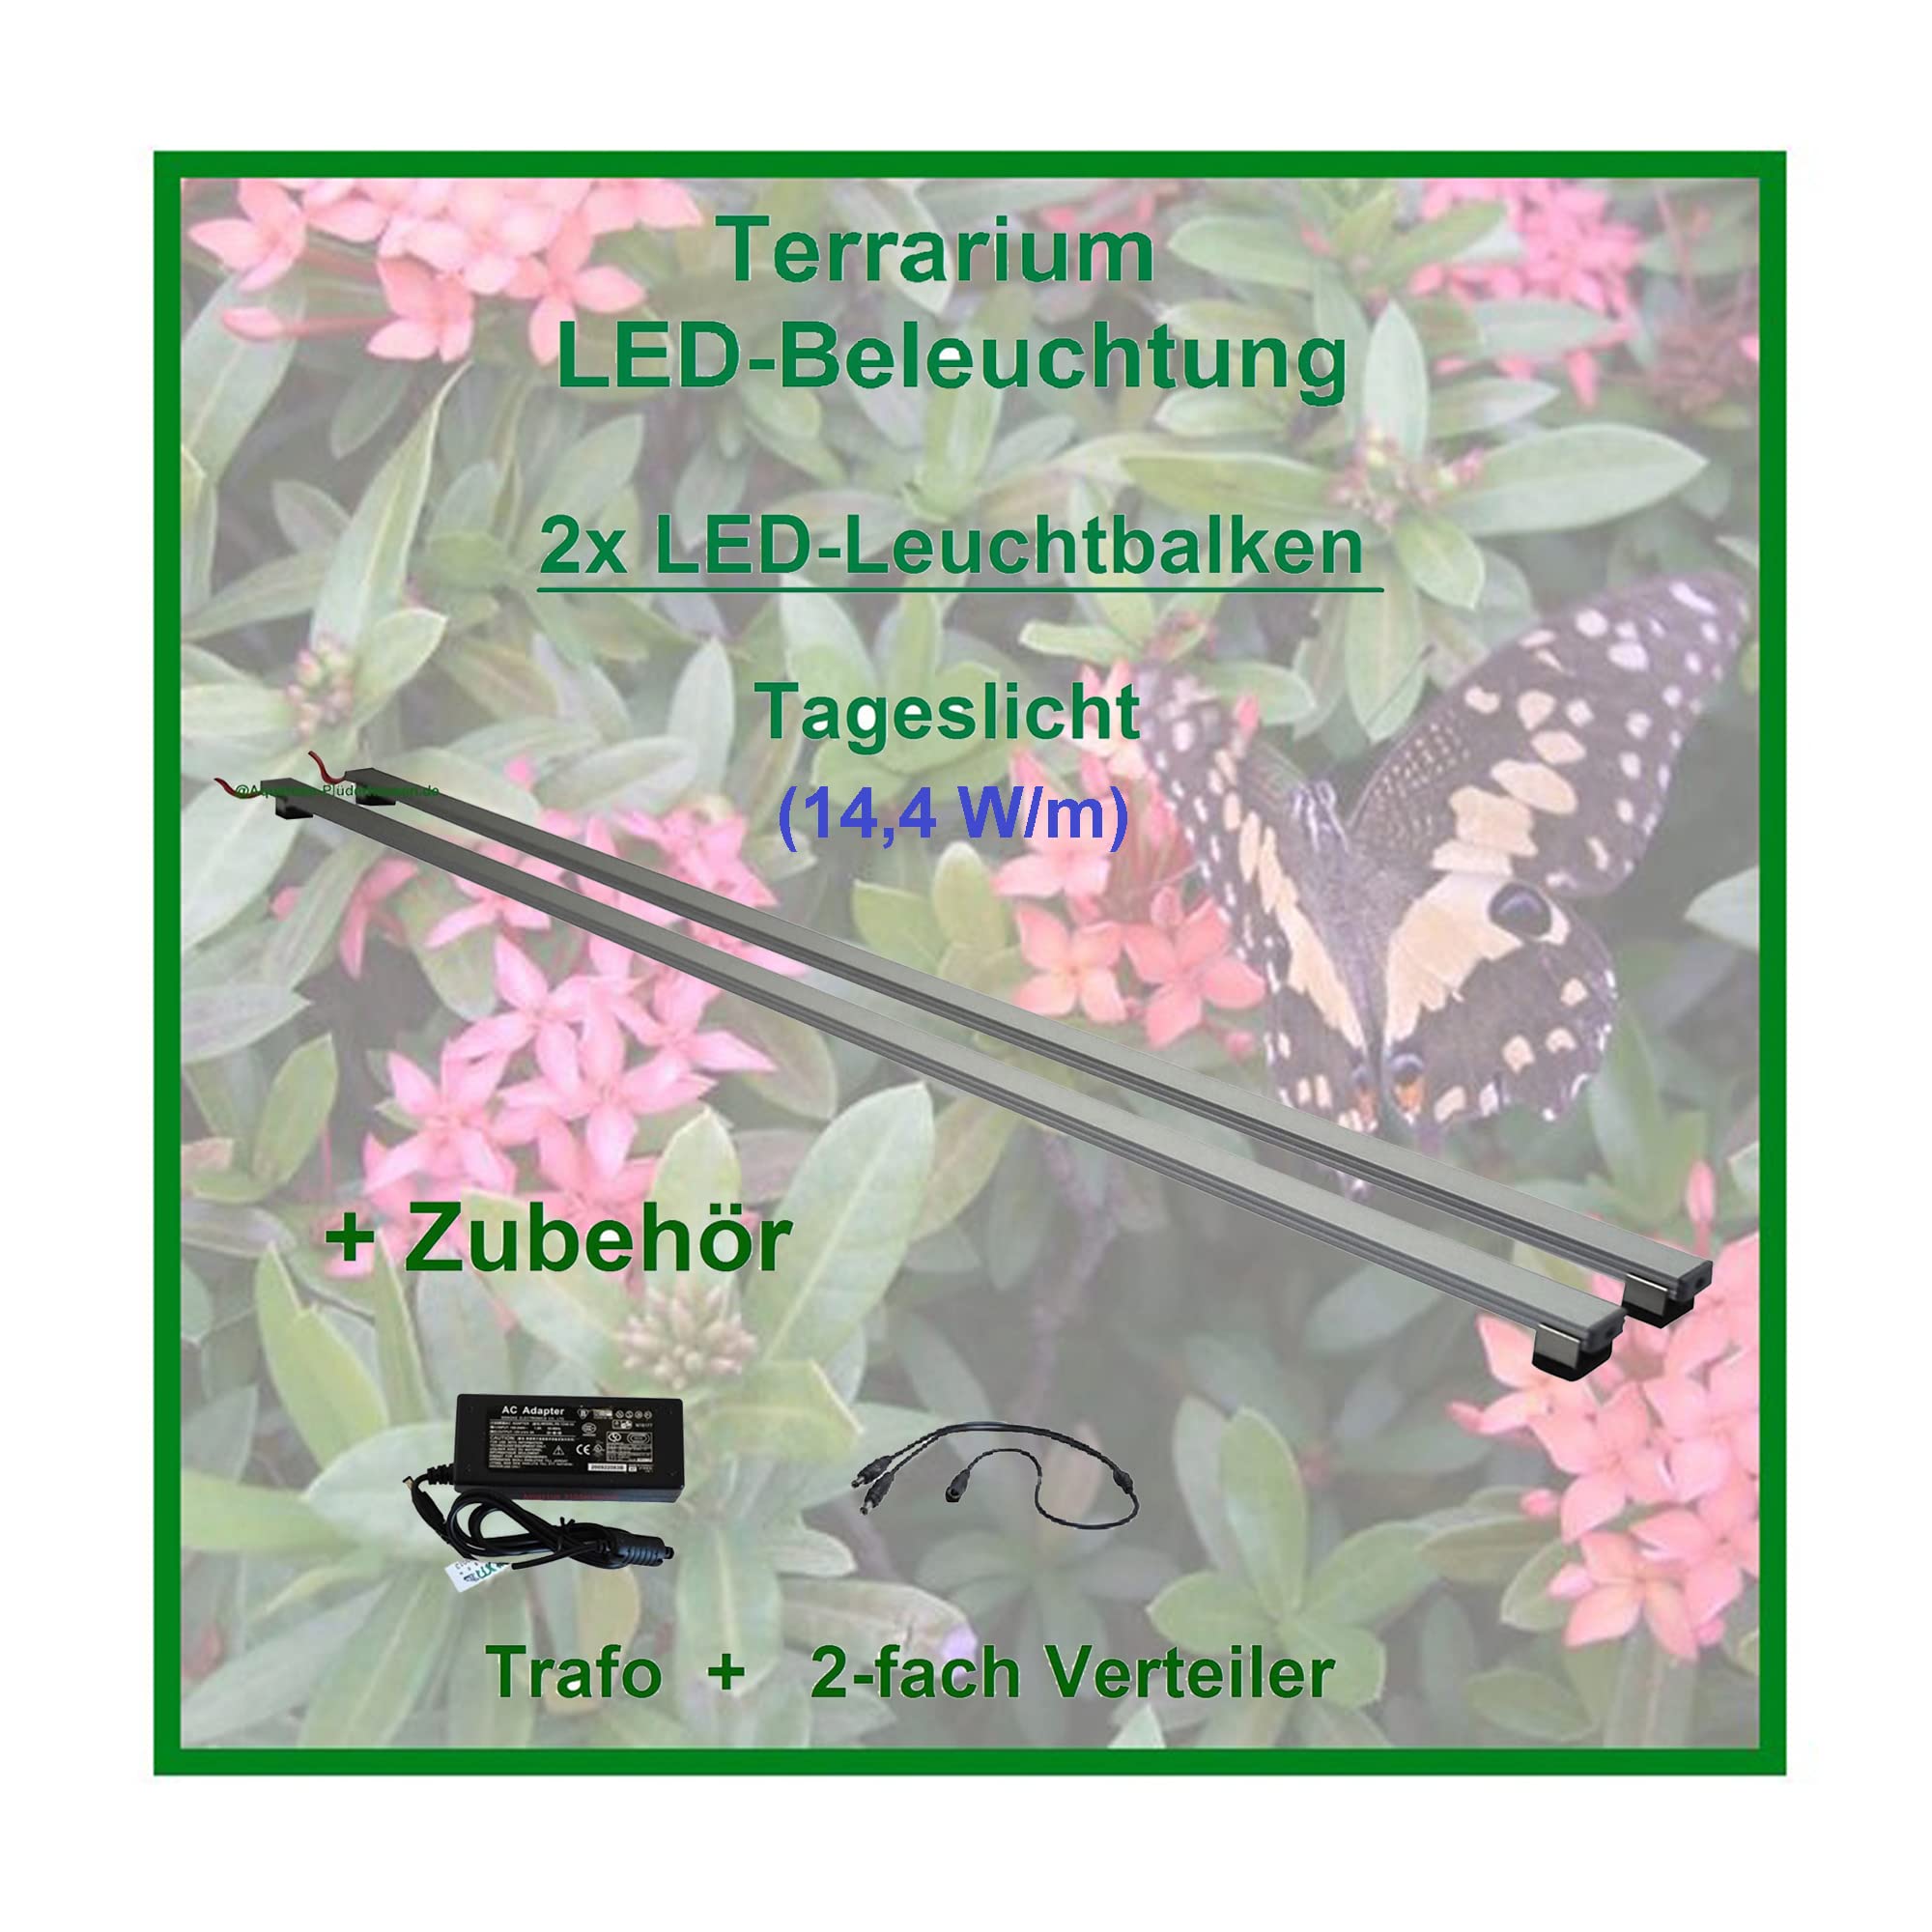 AQUARIUM PLÜDERHAUSEN Regenwald Terra, 2X LED-Beleuchtung 100 cm,Leuchtbalken,LED Tropen Pflanzenlicht